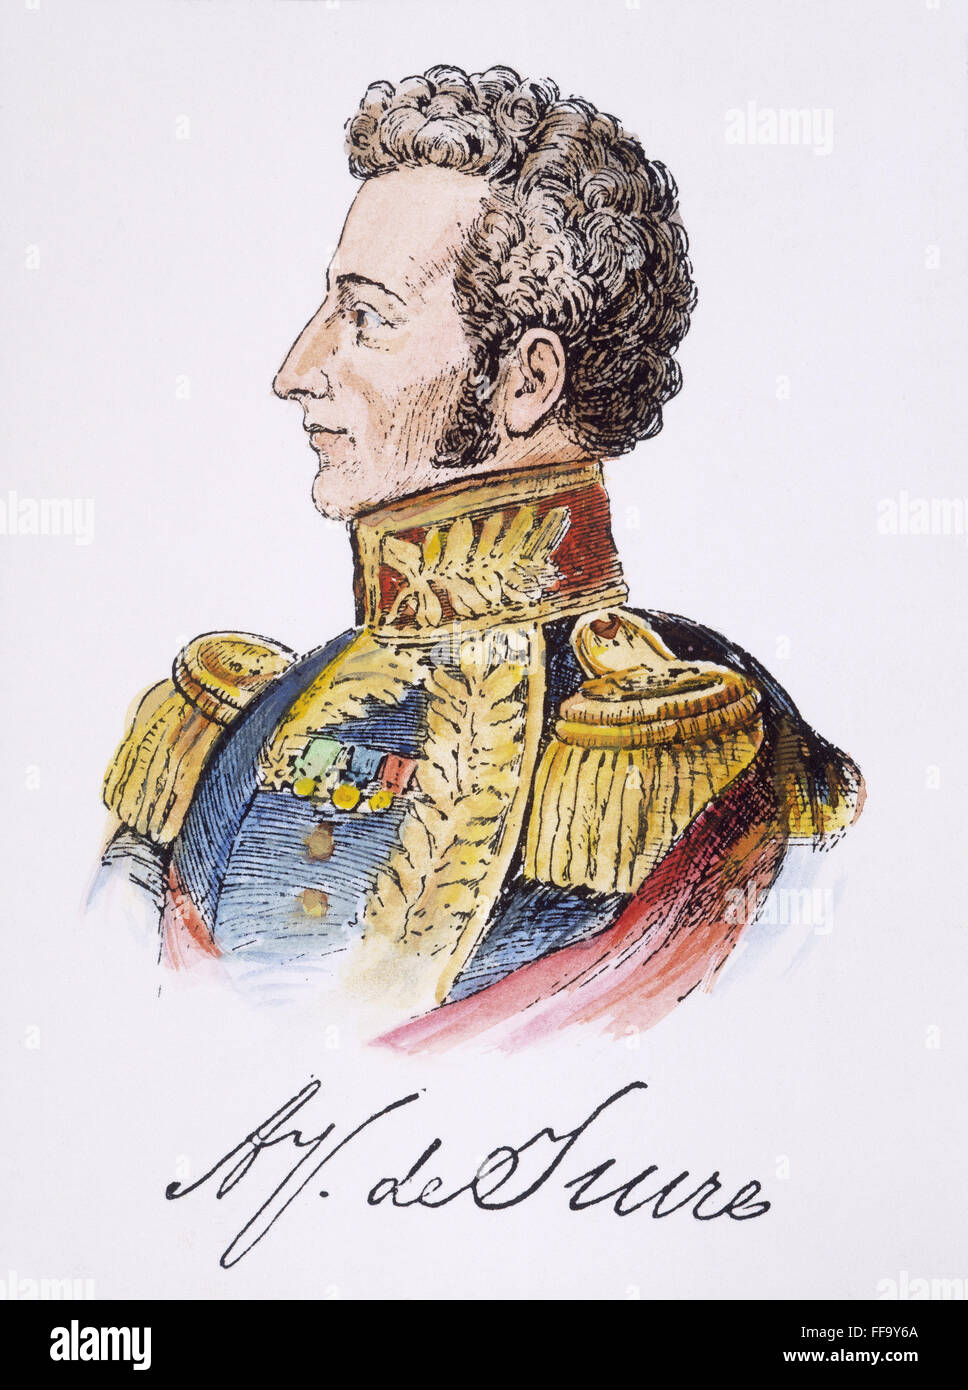 ANTONIO JOSE de SUCRE /n(1795-1830). Venezuelan liberator and general. Pen-and-ink drawing, 19th century. Stock Photo